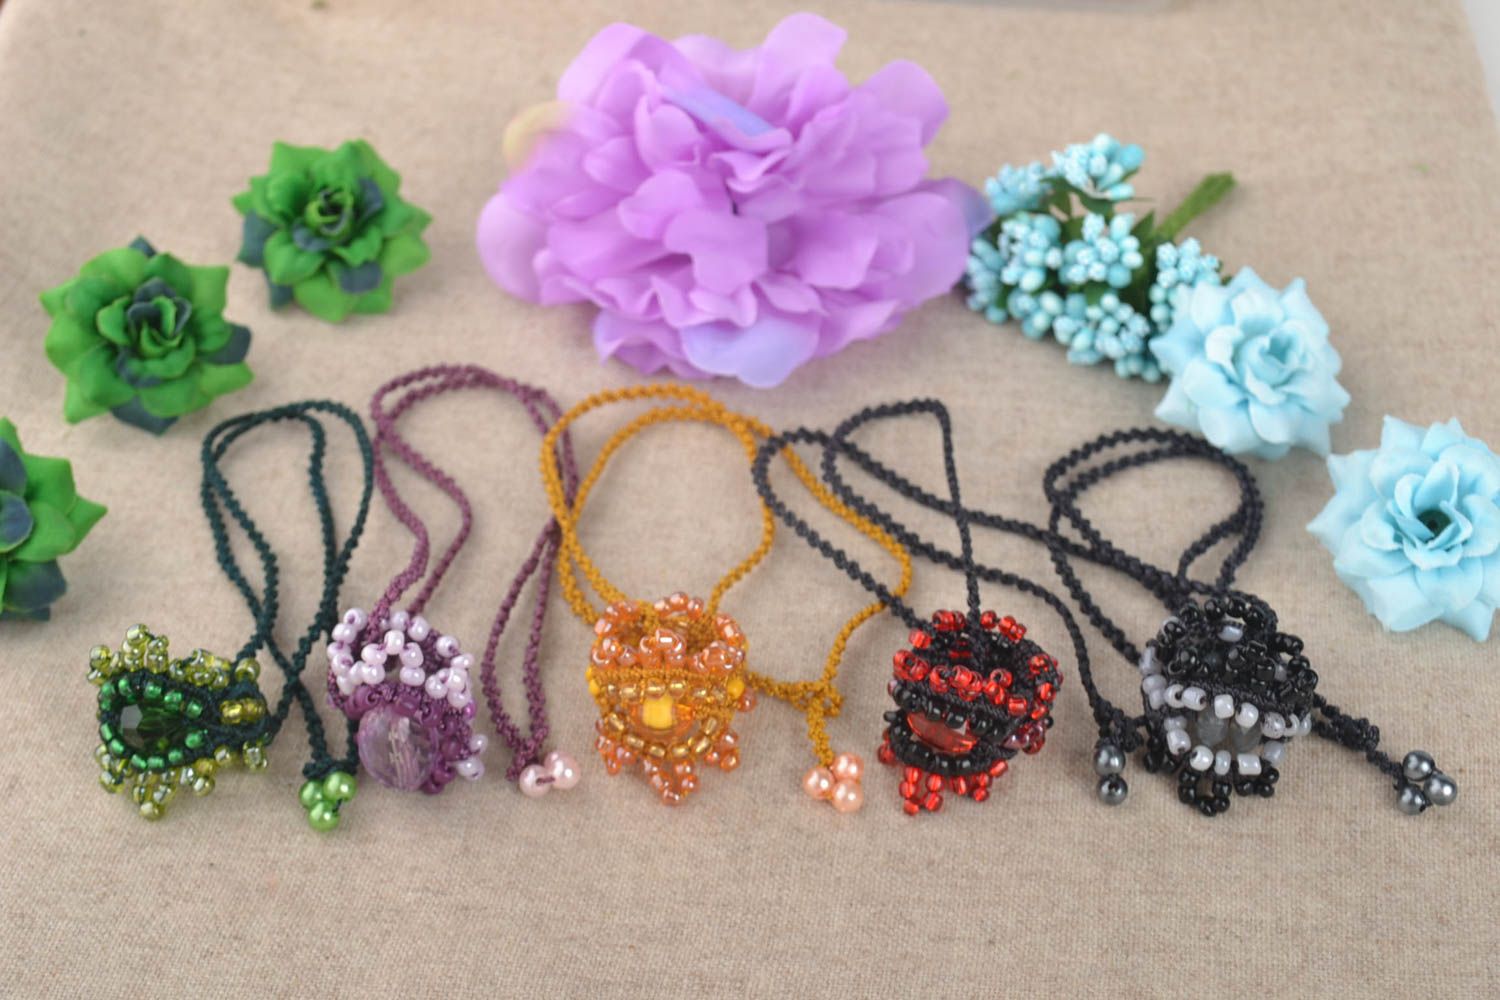 Handmade pendant designer pendant beads pendant macrame pendant set of 5 items photo 1